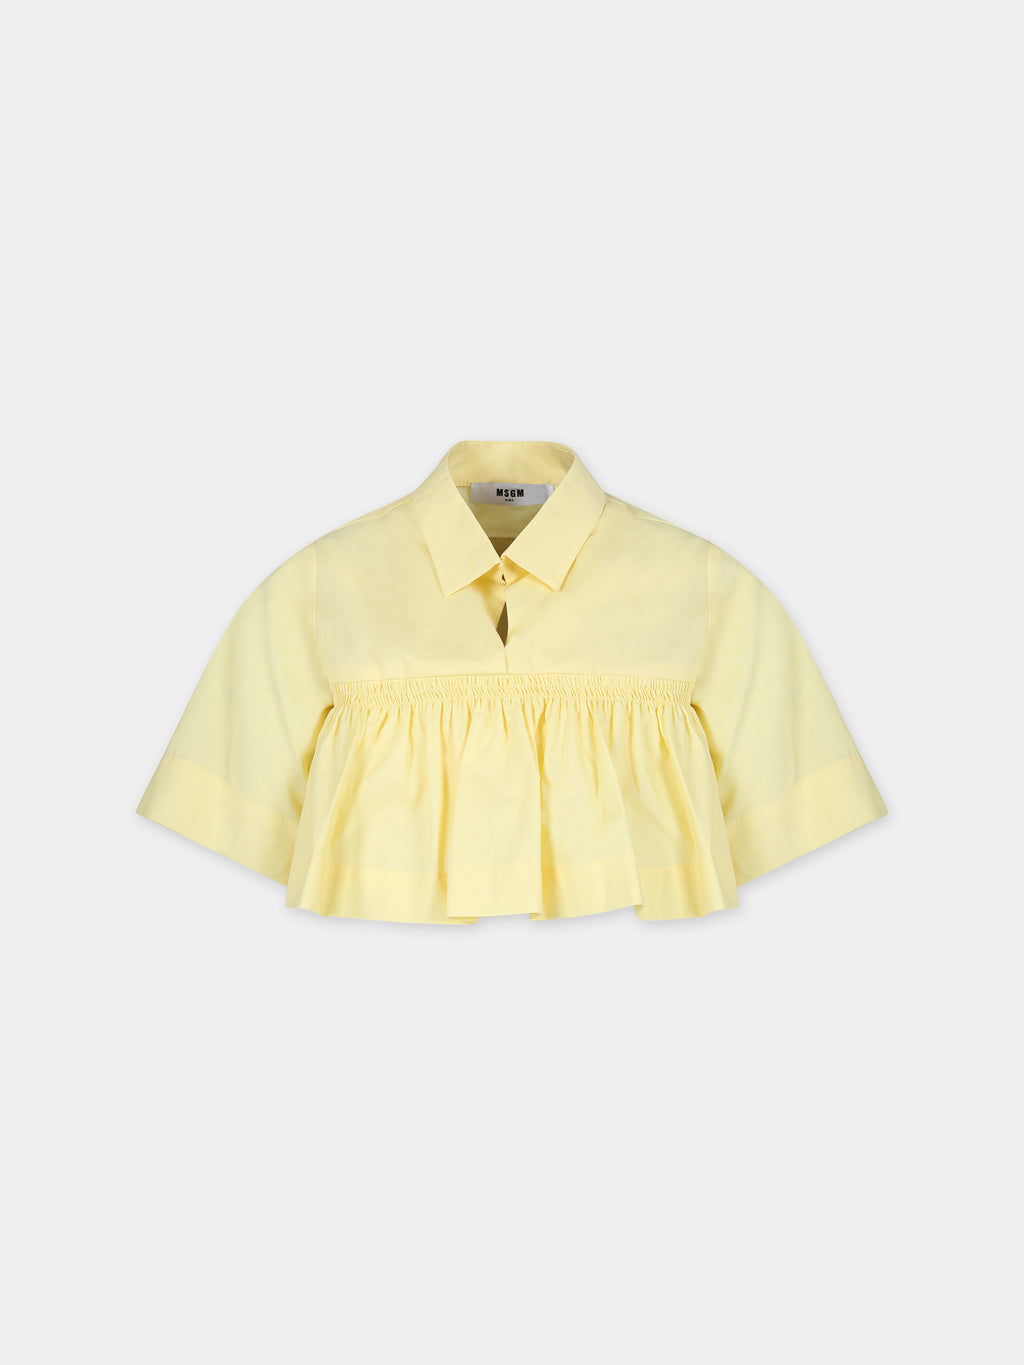 Chemise courte jaune for girl with logo